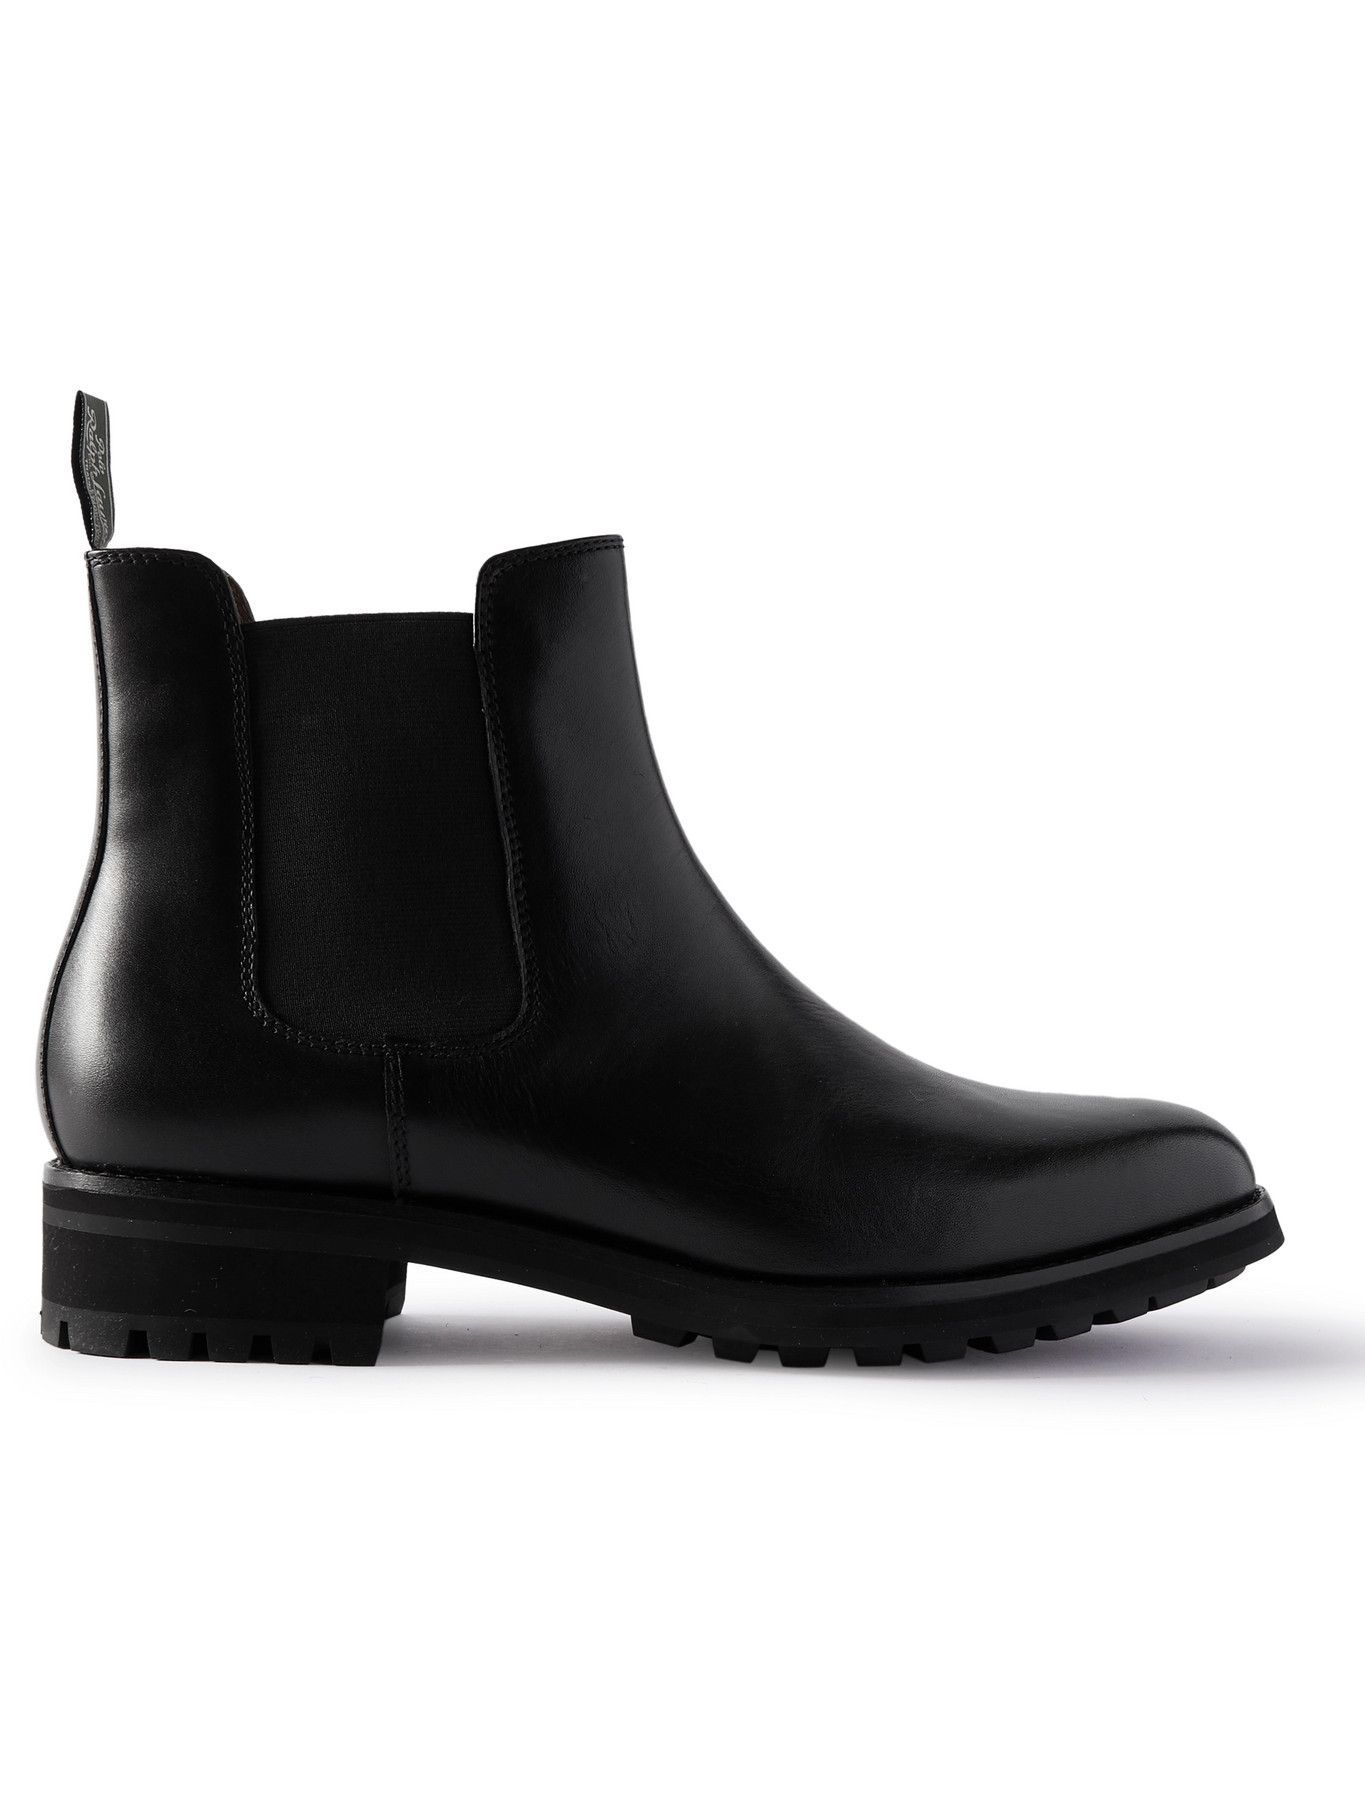 Photo: Polo Ralph Lauren - Bryson Leather Chelsea Boots - Black